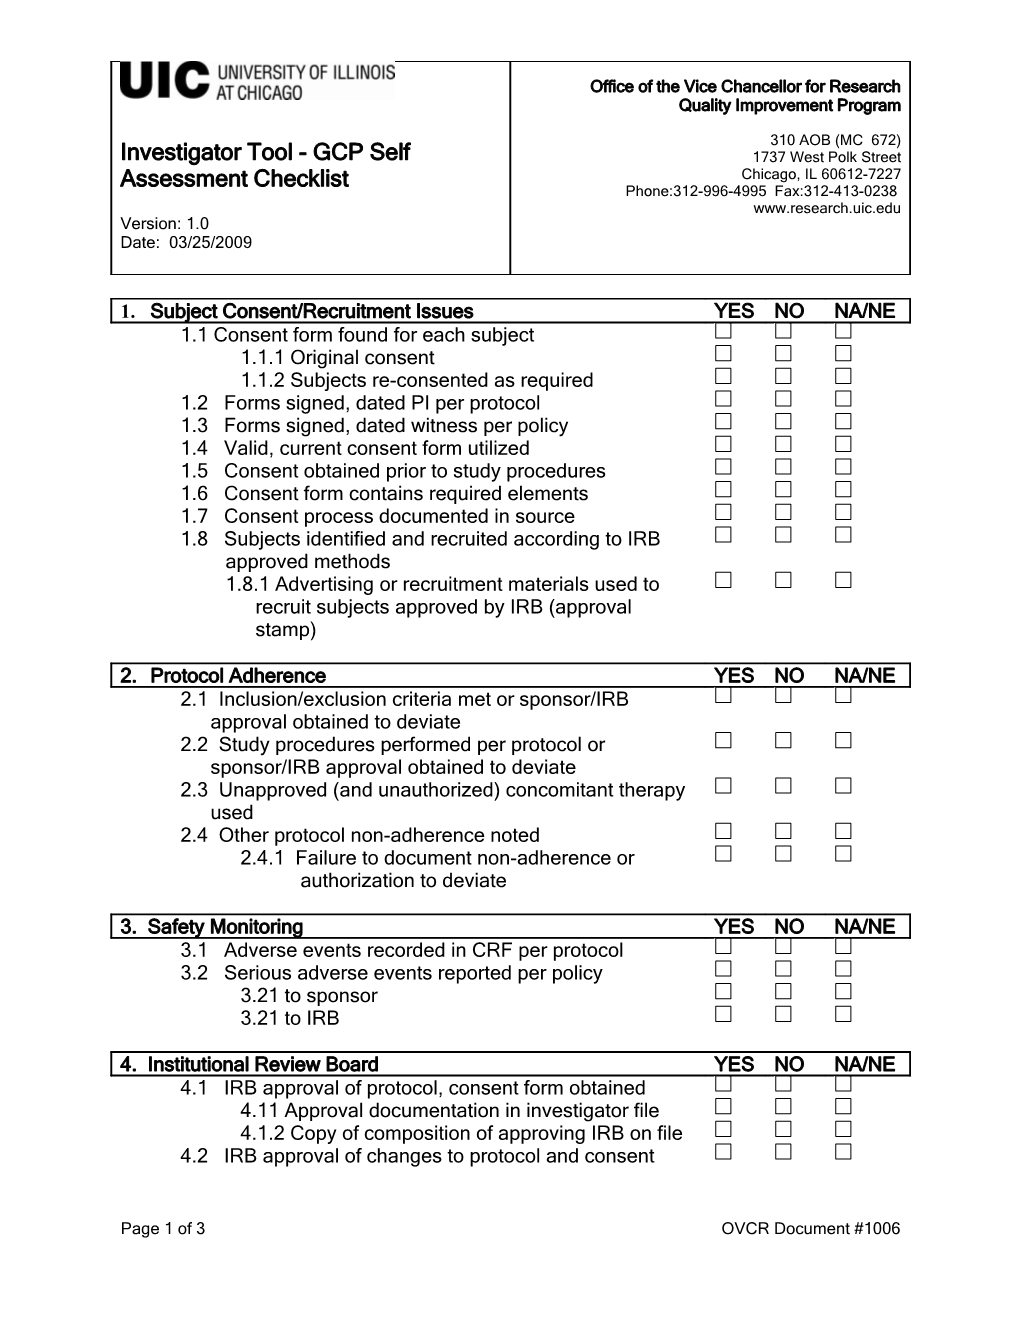 Investigator Tool - GCP Self Assessment Checklist, Version1.0